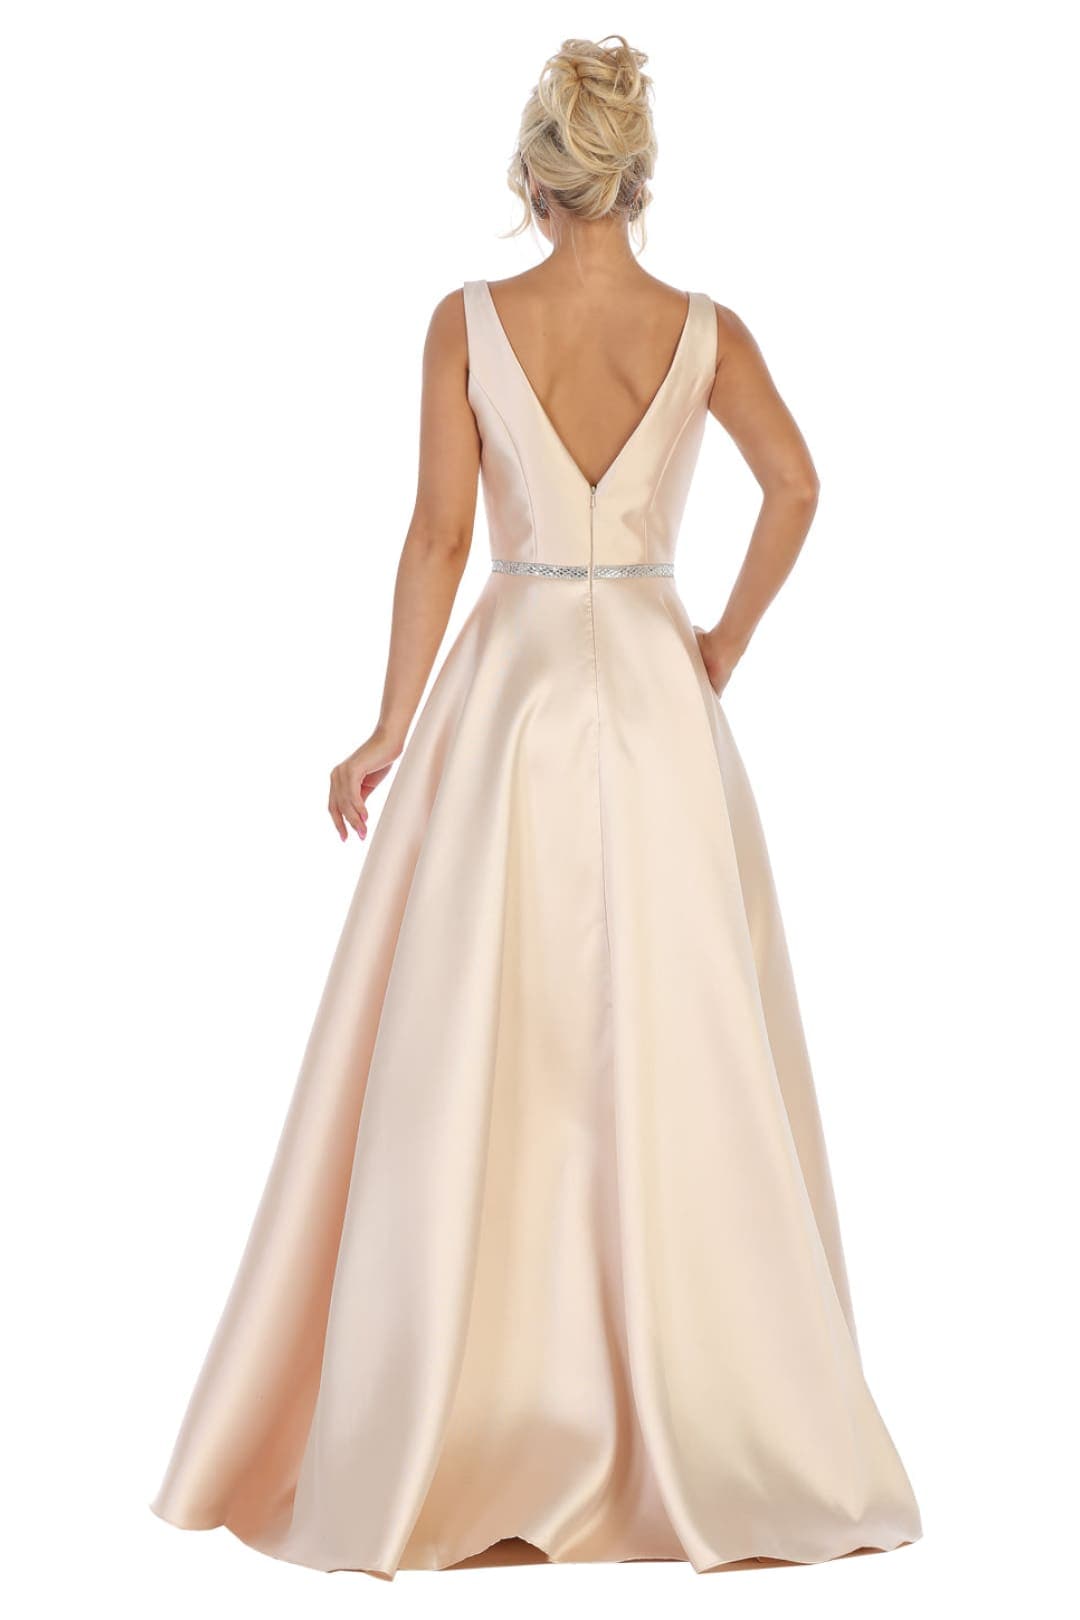 Simple Sleeveless Wedding Gown Dress